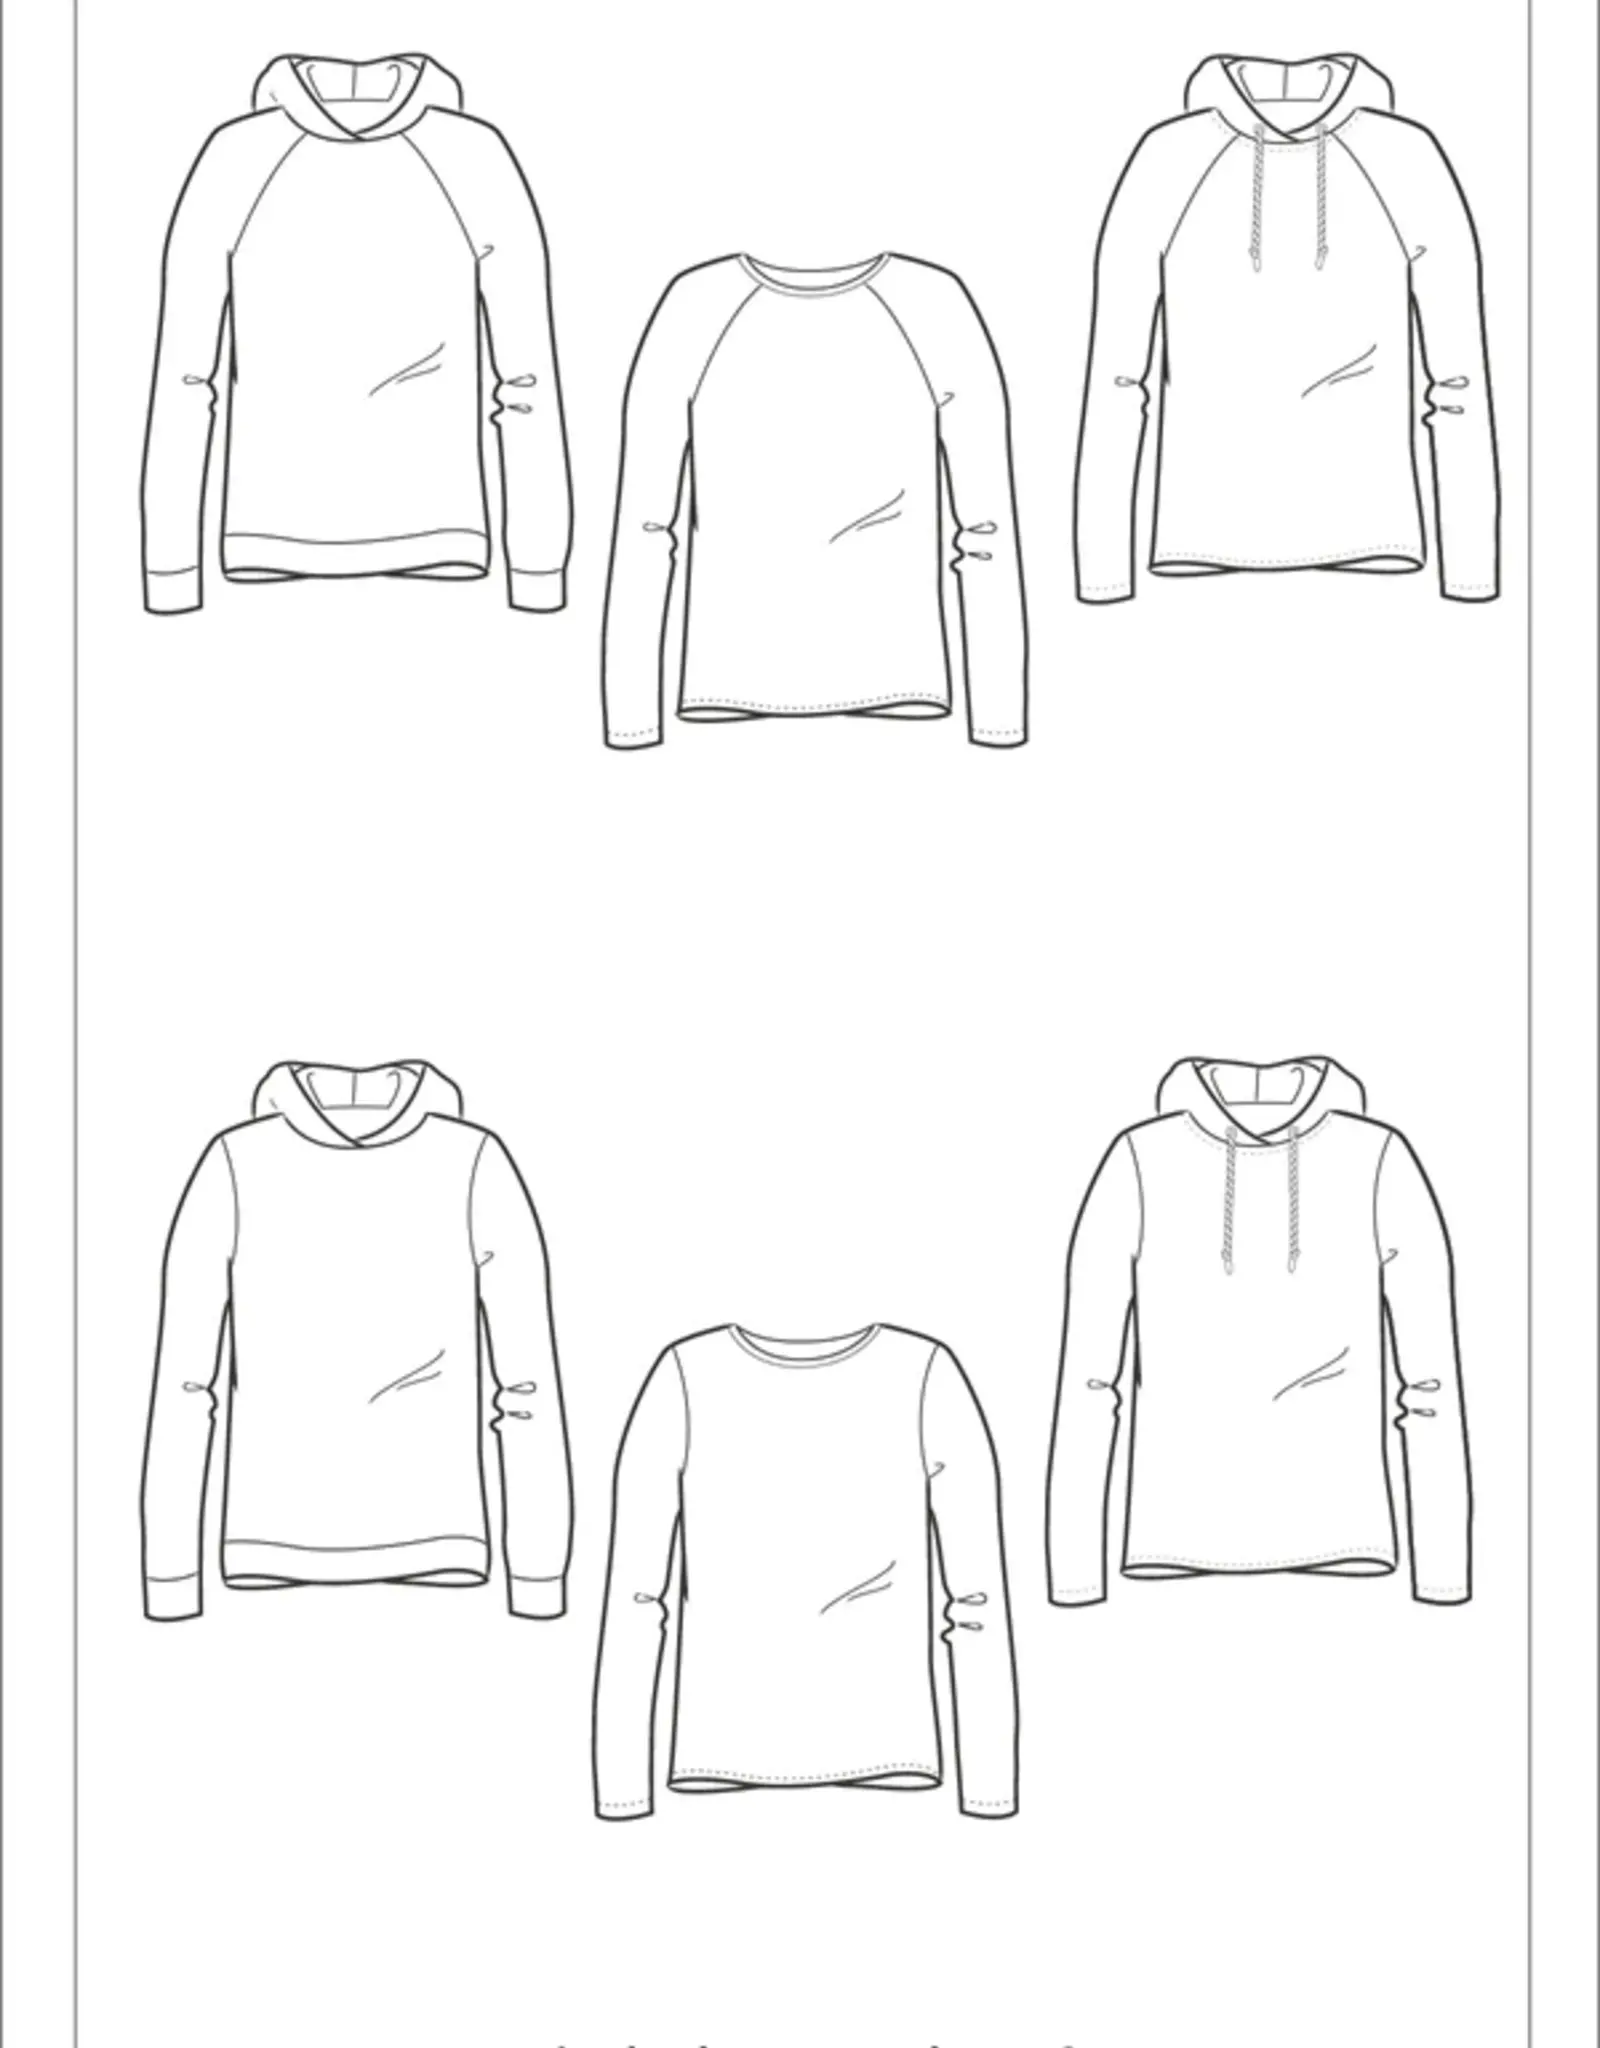 Ki-ba-doo Patroon  mix & match hoodie/pullover